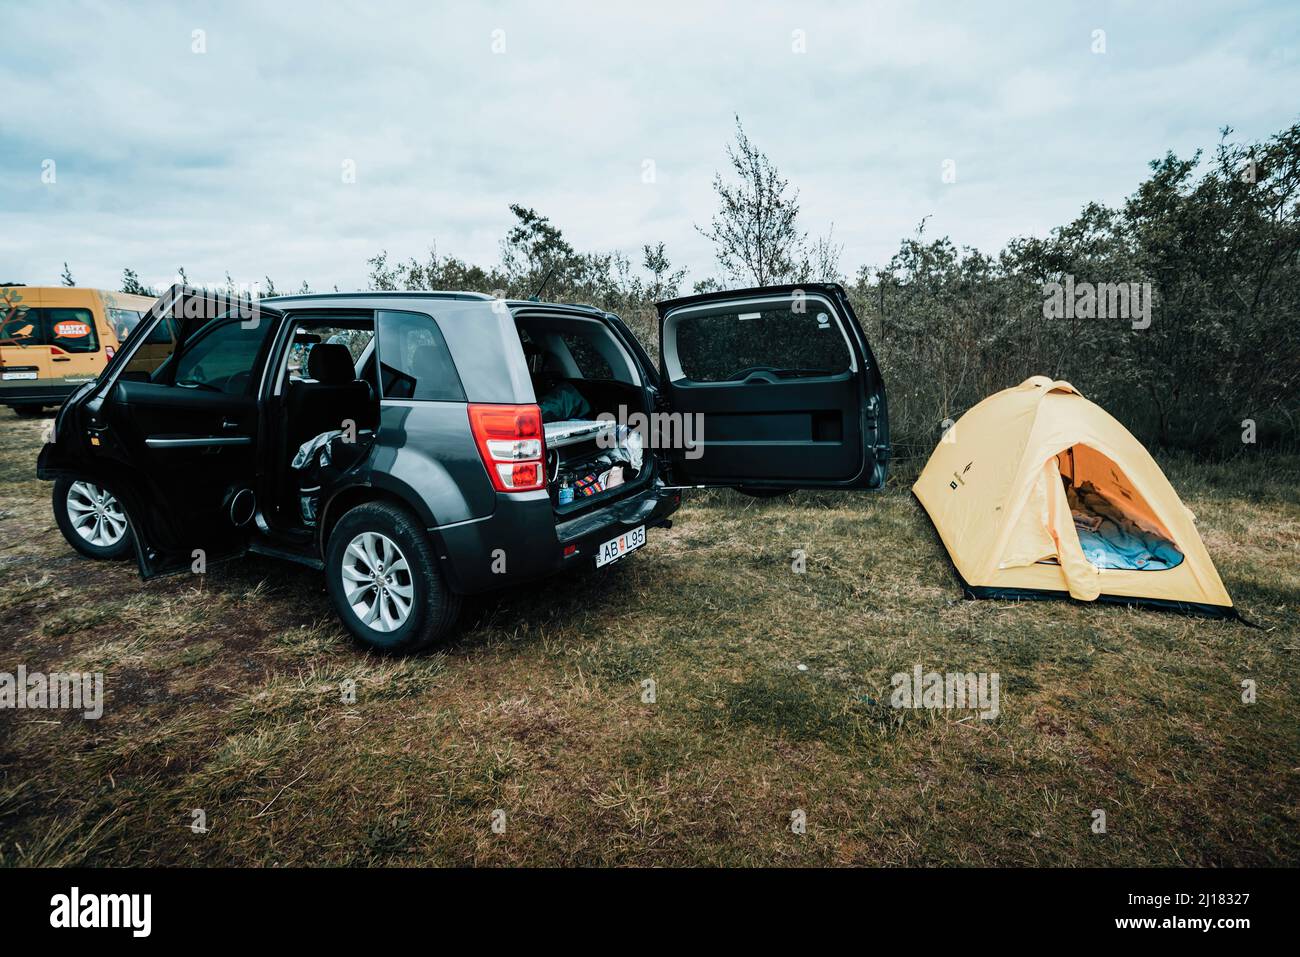 A tent near the Suzuki grand Vitara car in Iceland during a cloudy day Stock Photo